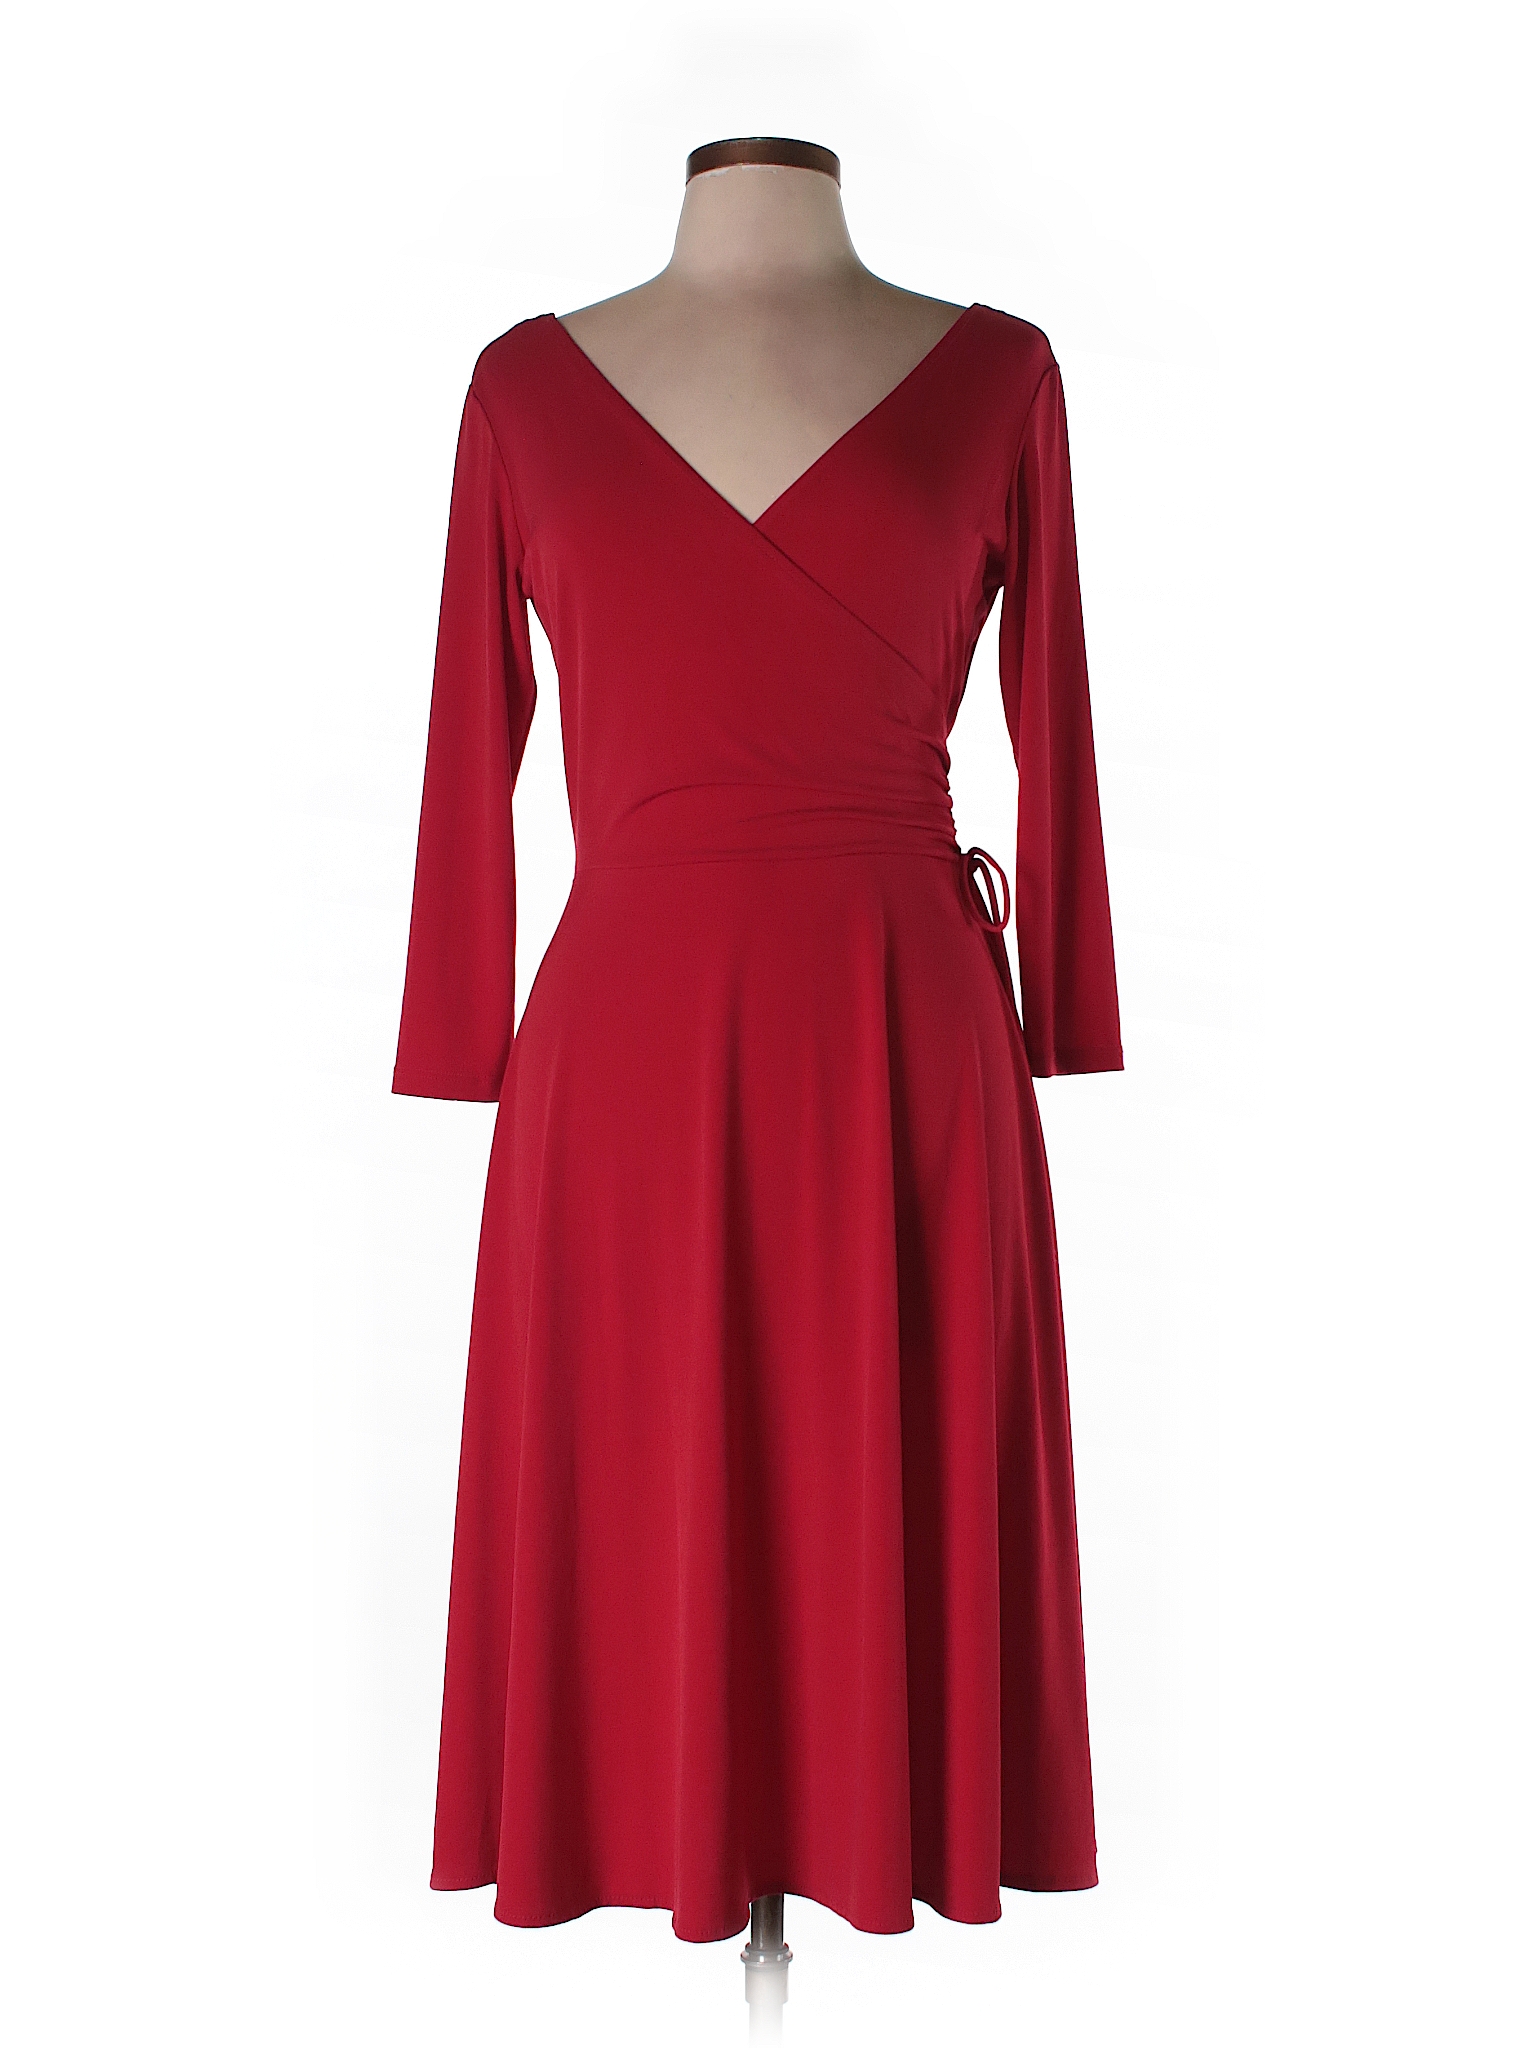 DressBarn Solid Red Cocktail Dress Size 12 - 75% off | thredUP